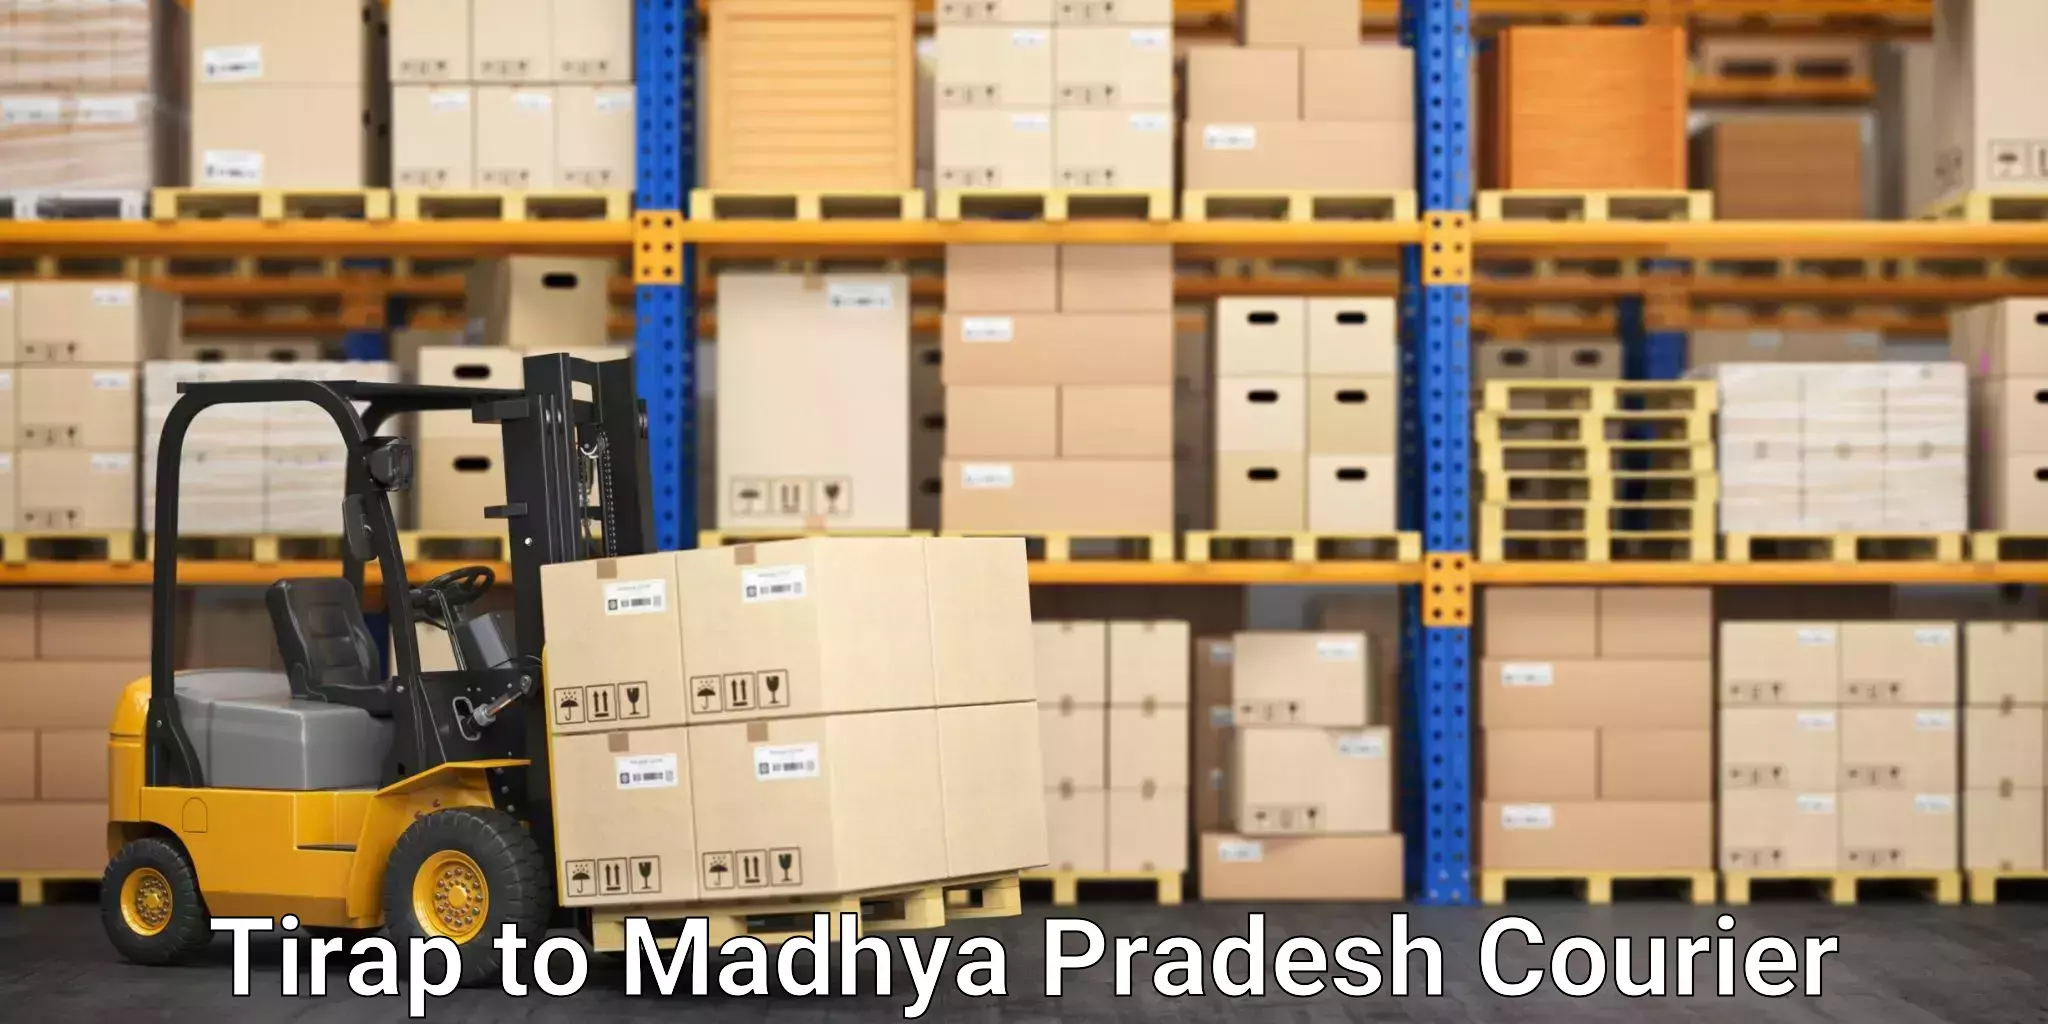 Global logistics network Tirap to Madhya Pradesh